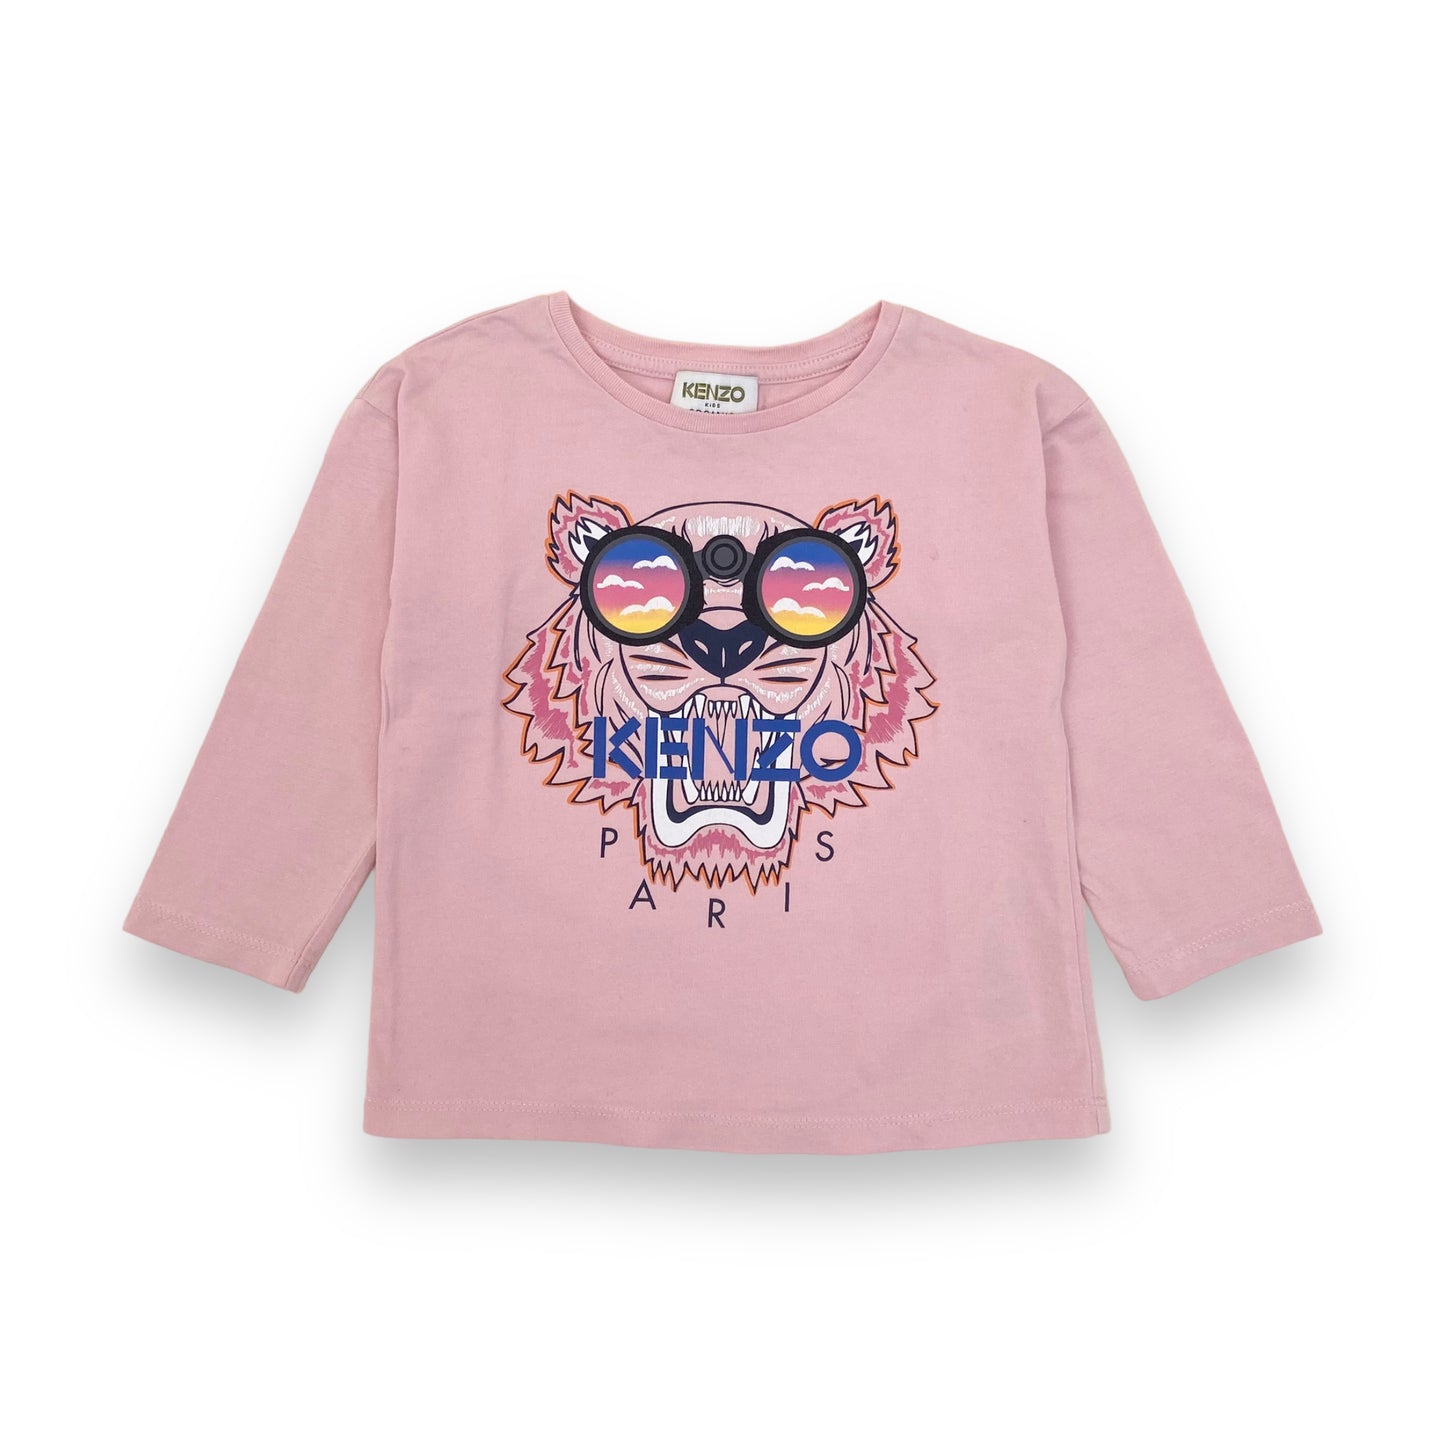 Kenzo Paris Children’s T-shirt Pink AGE2